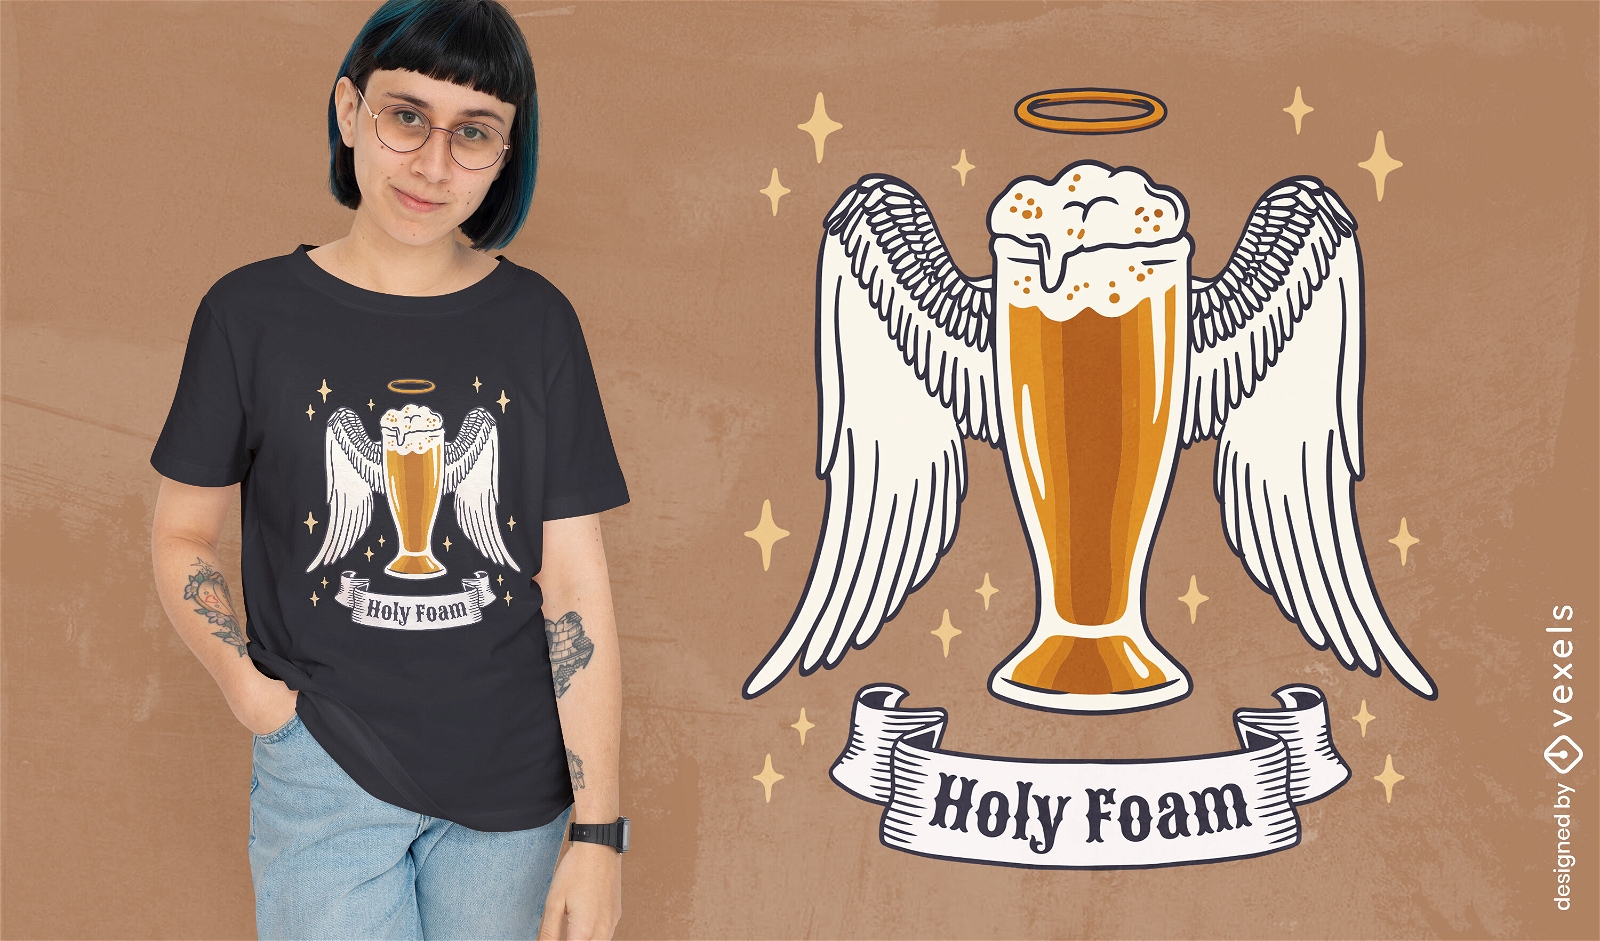 Holy foam beer t-shirt design